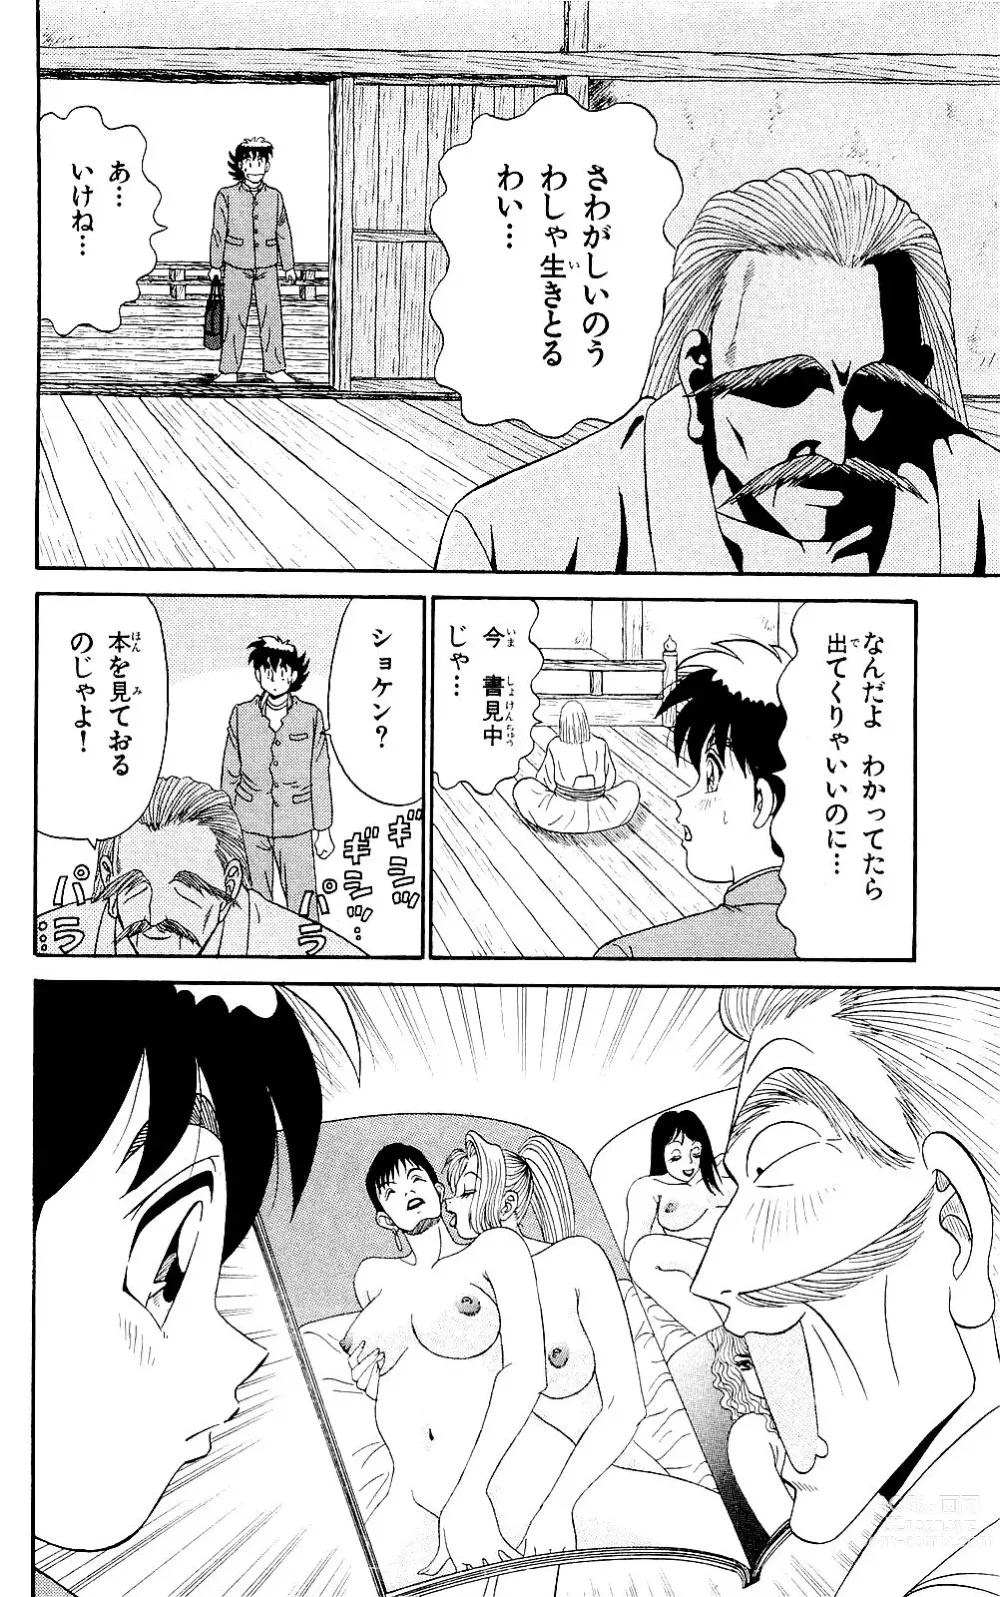 Page 180 of manga Orette Piyoritan 06